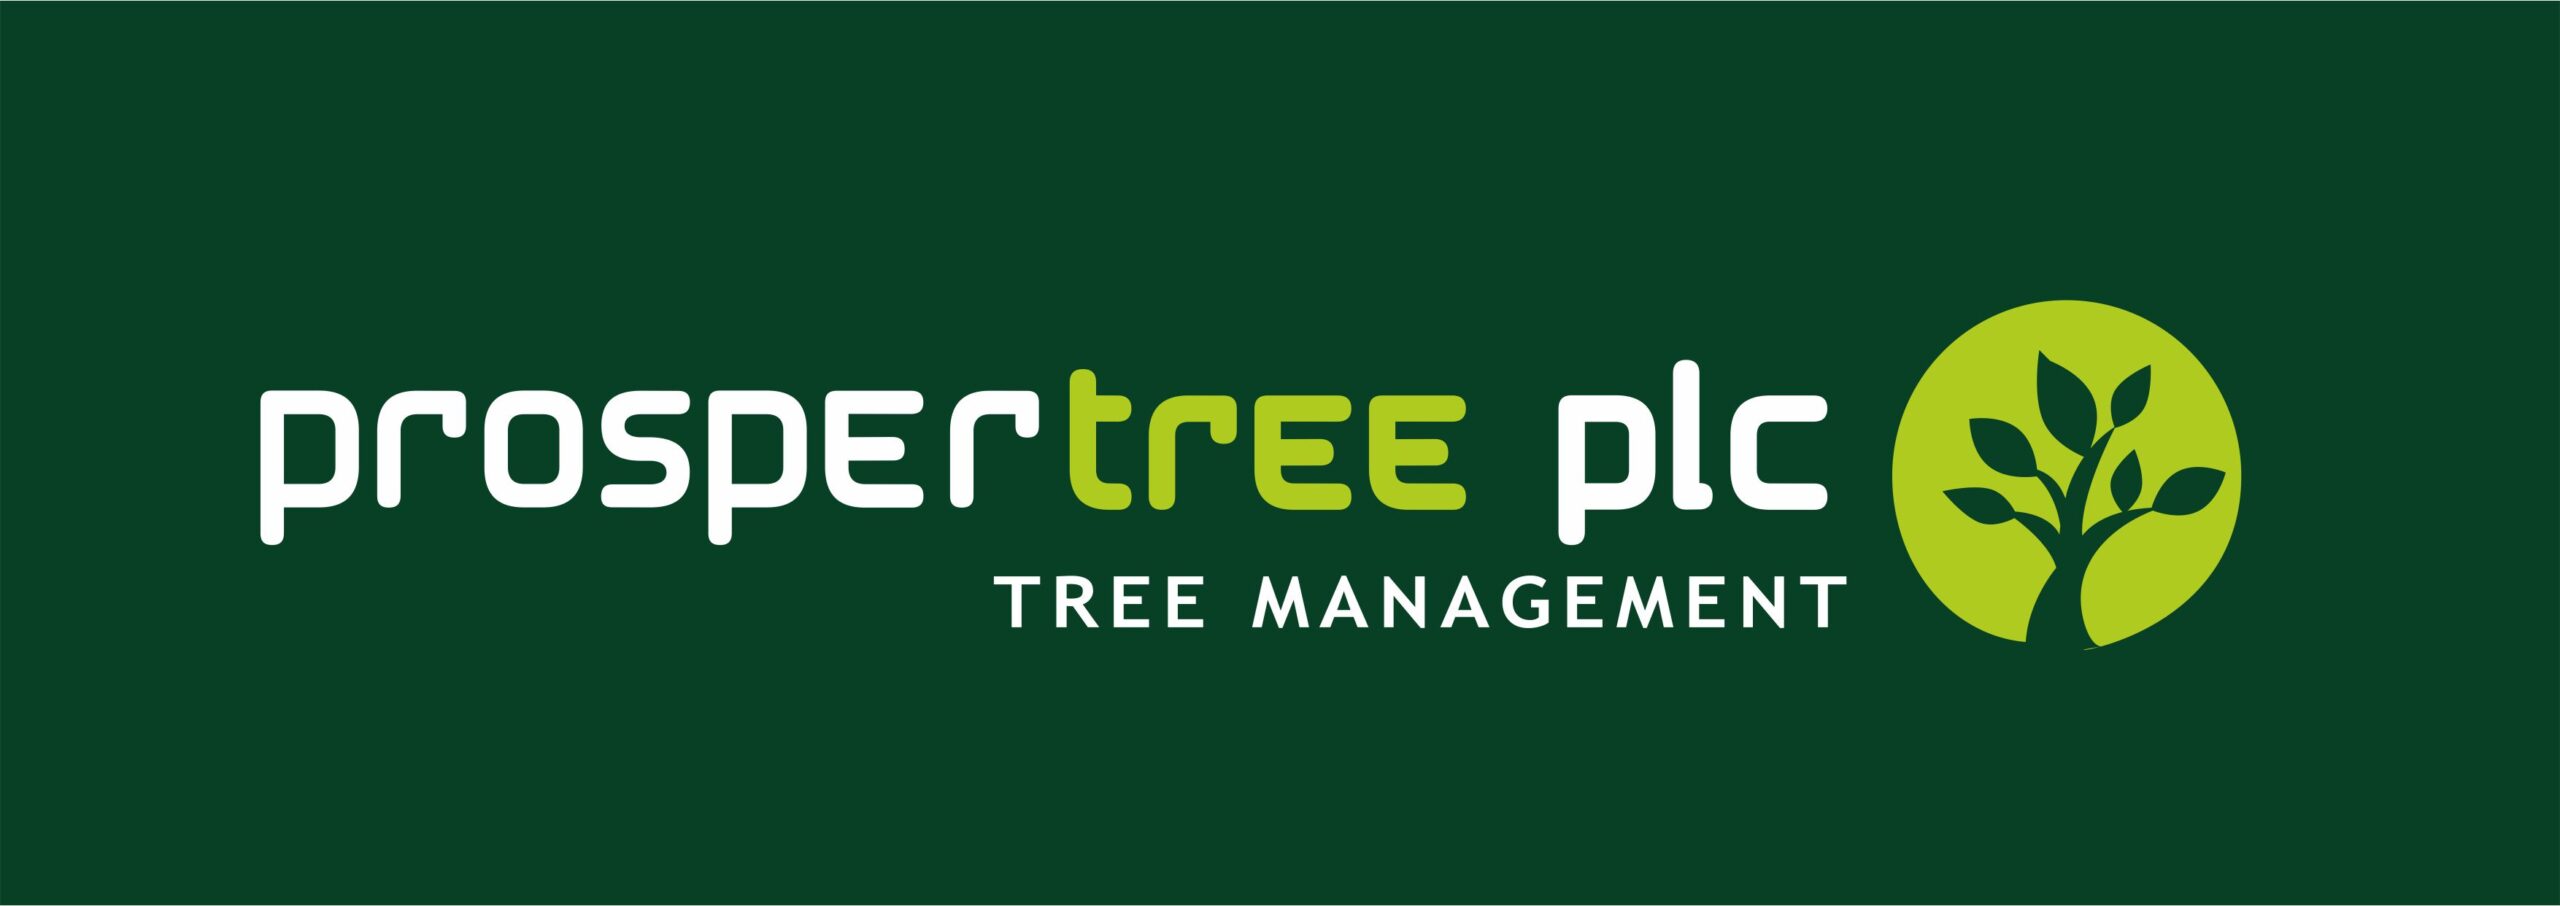 prospert tree plc